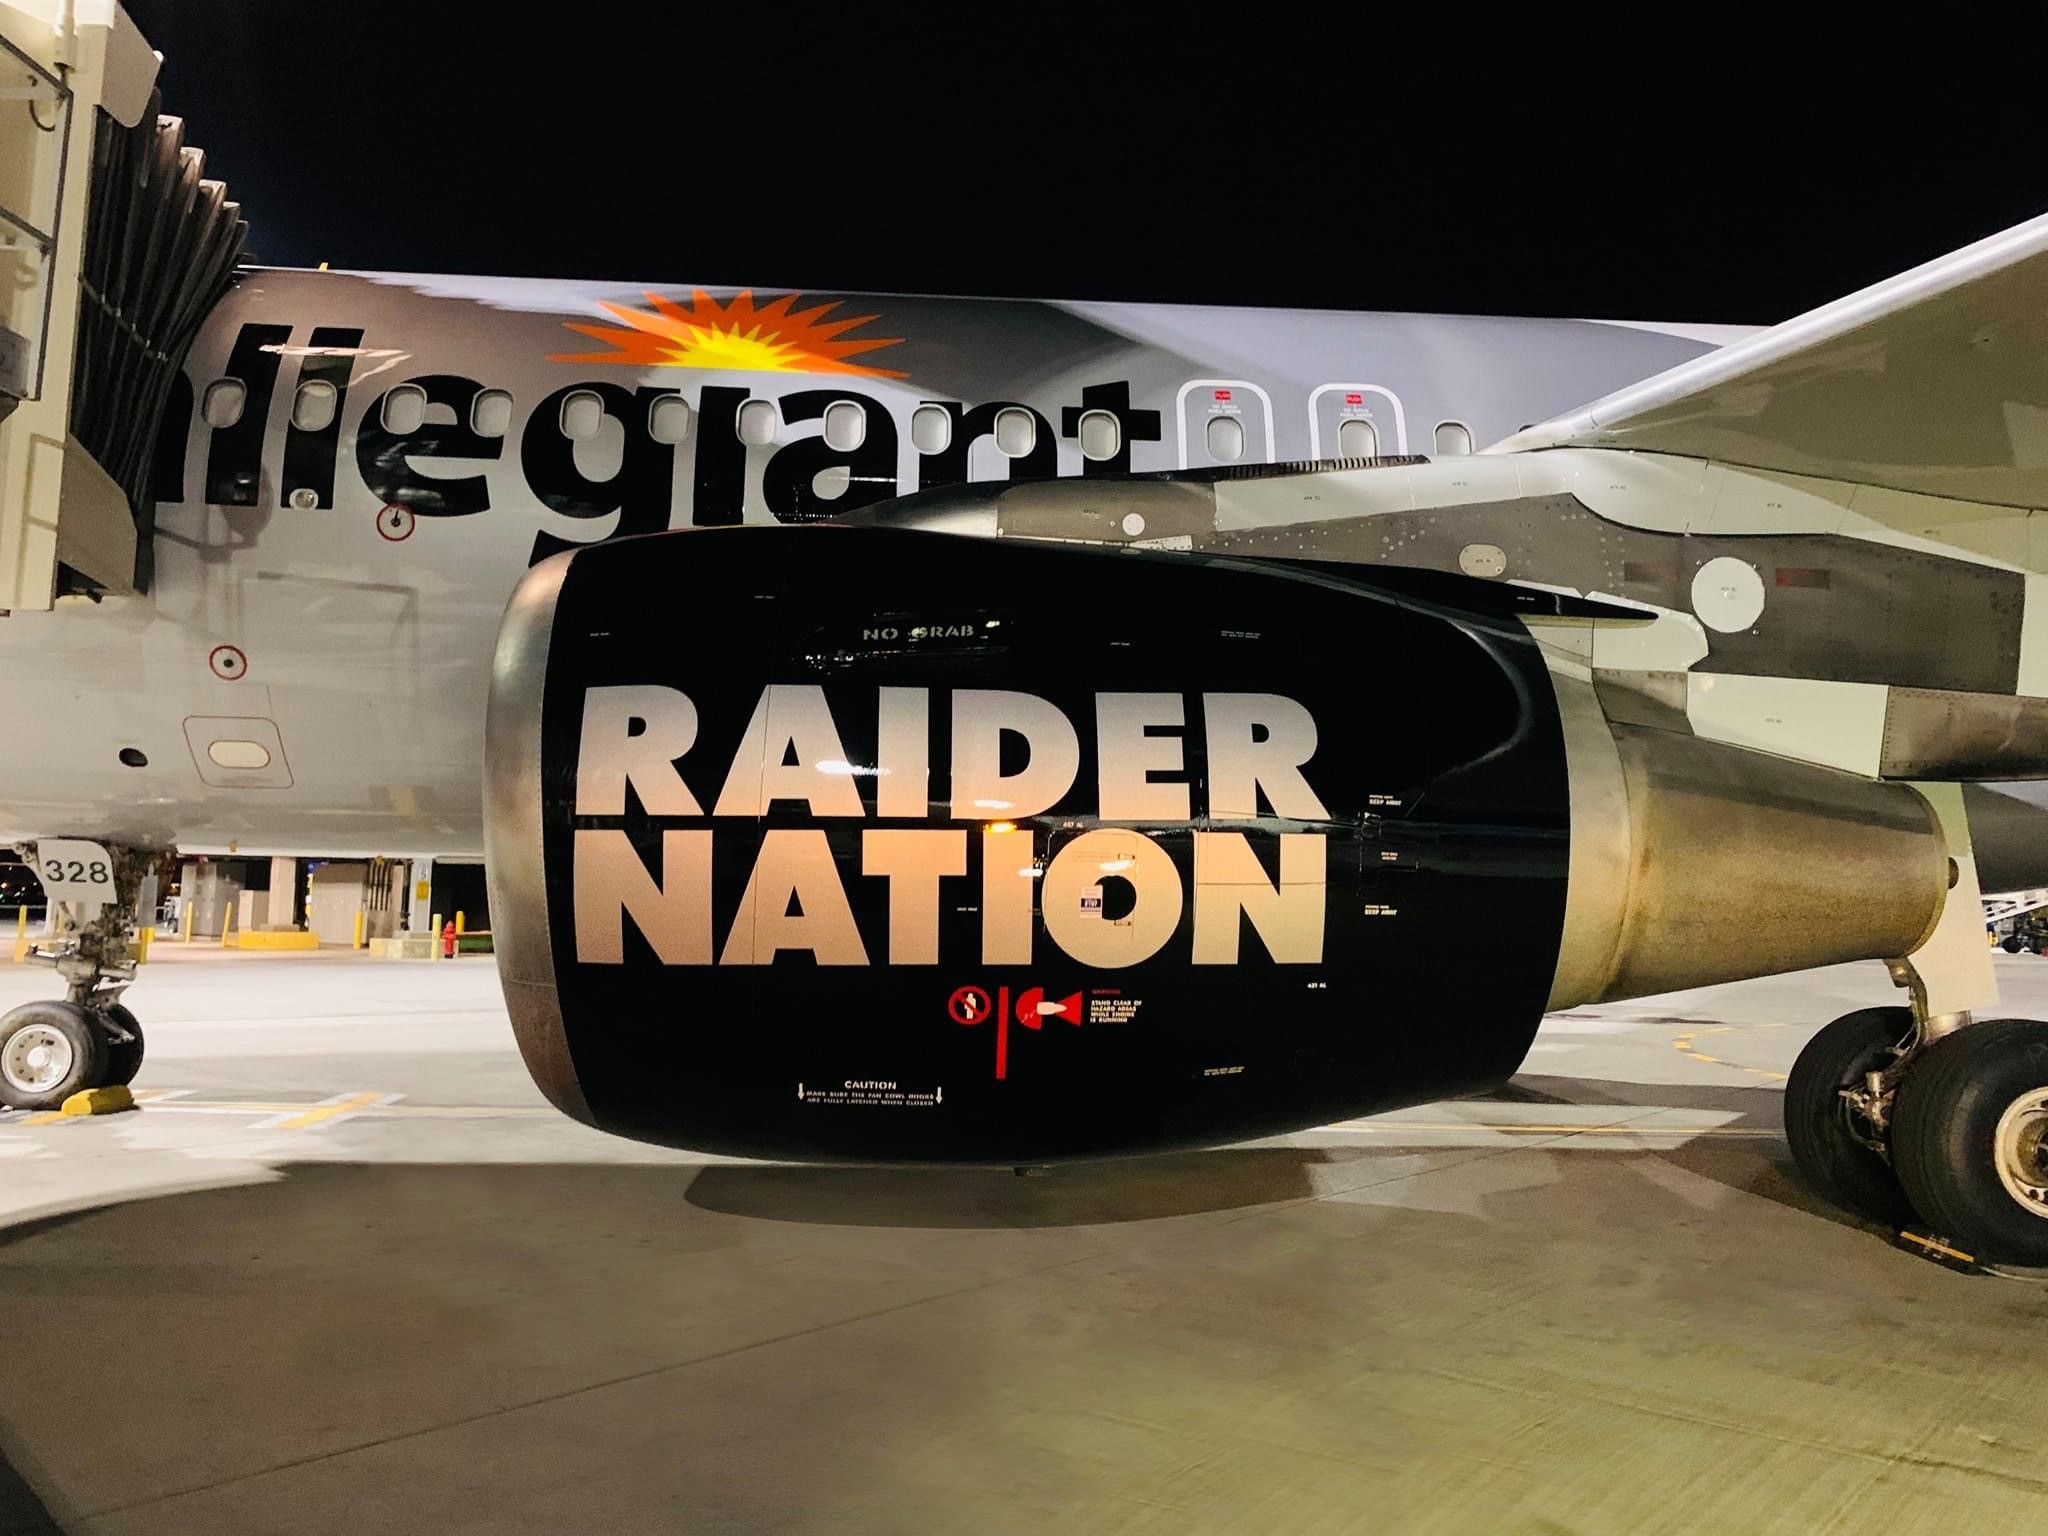 Credit Raiders in all stories: Raider Nation Engine